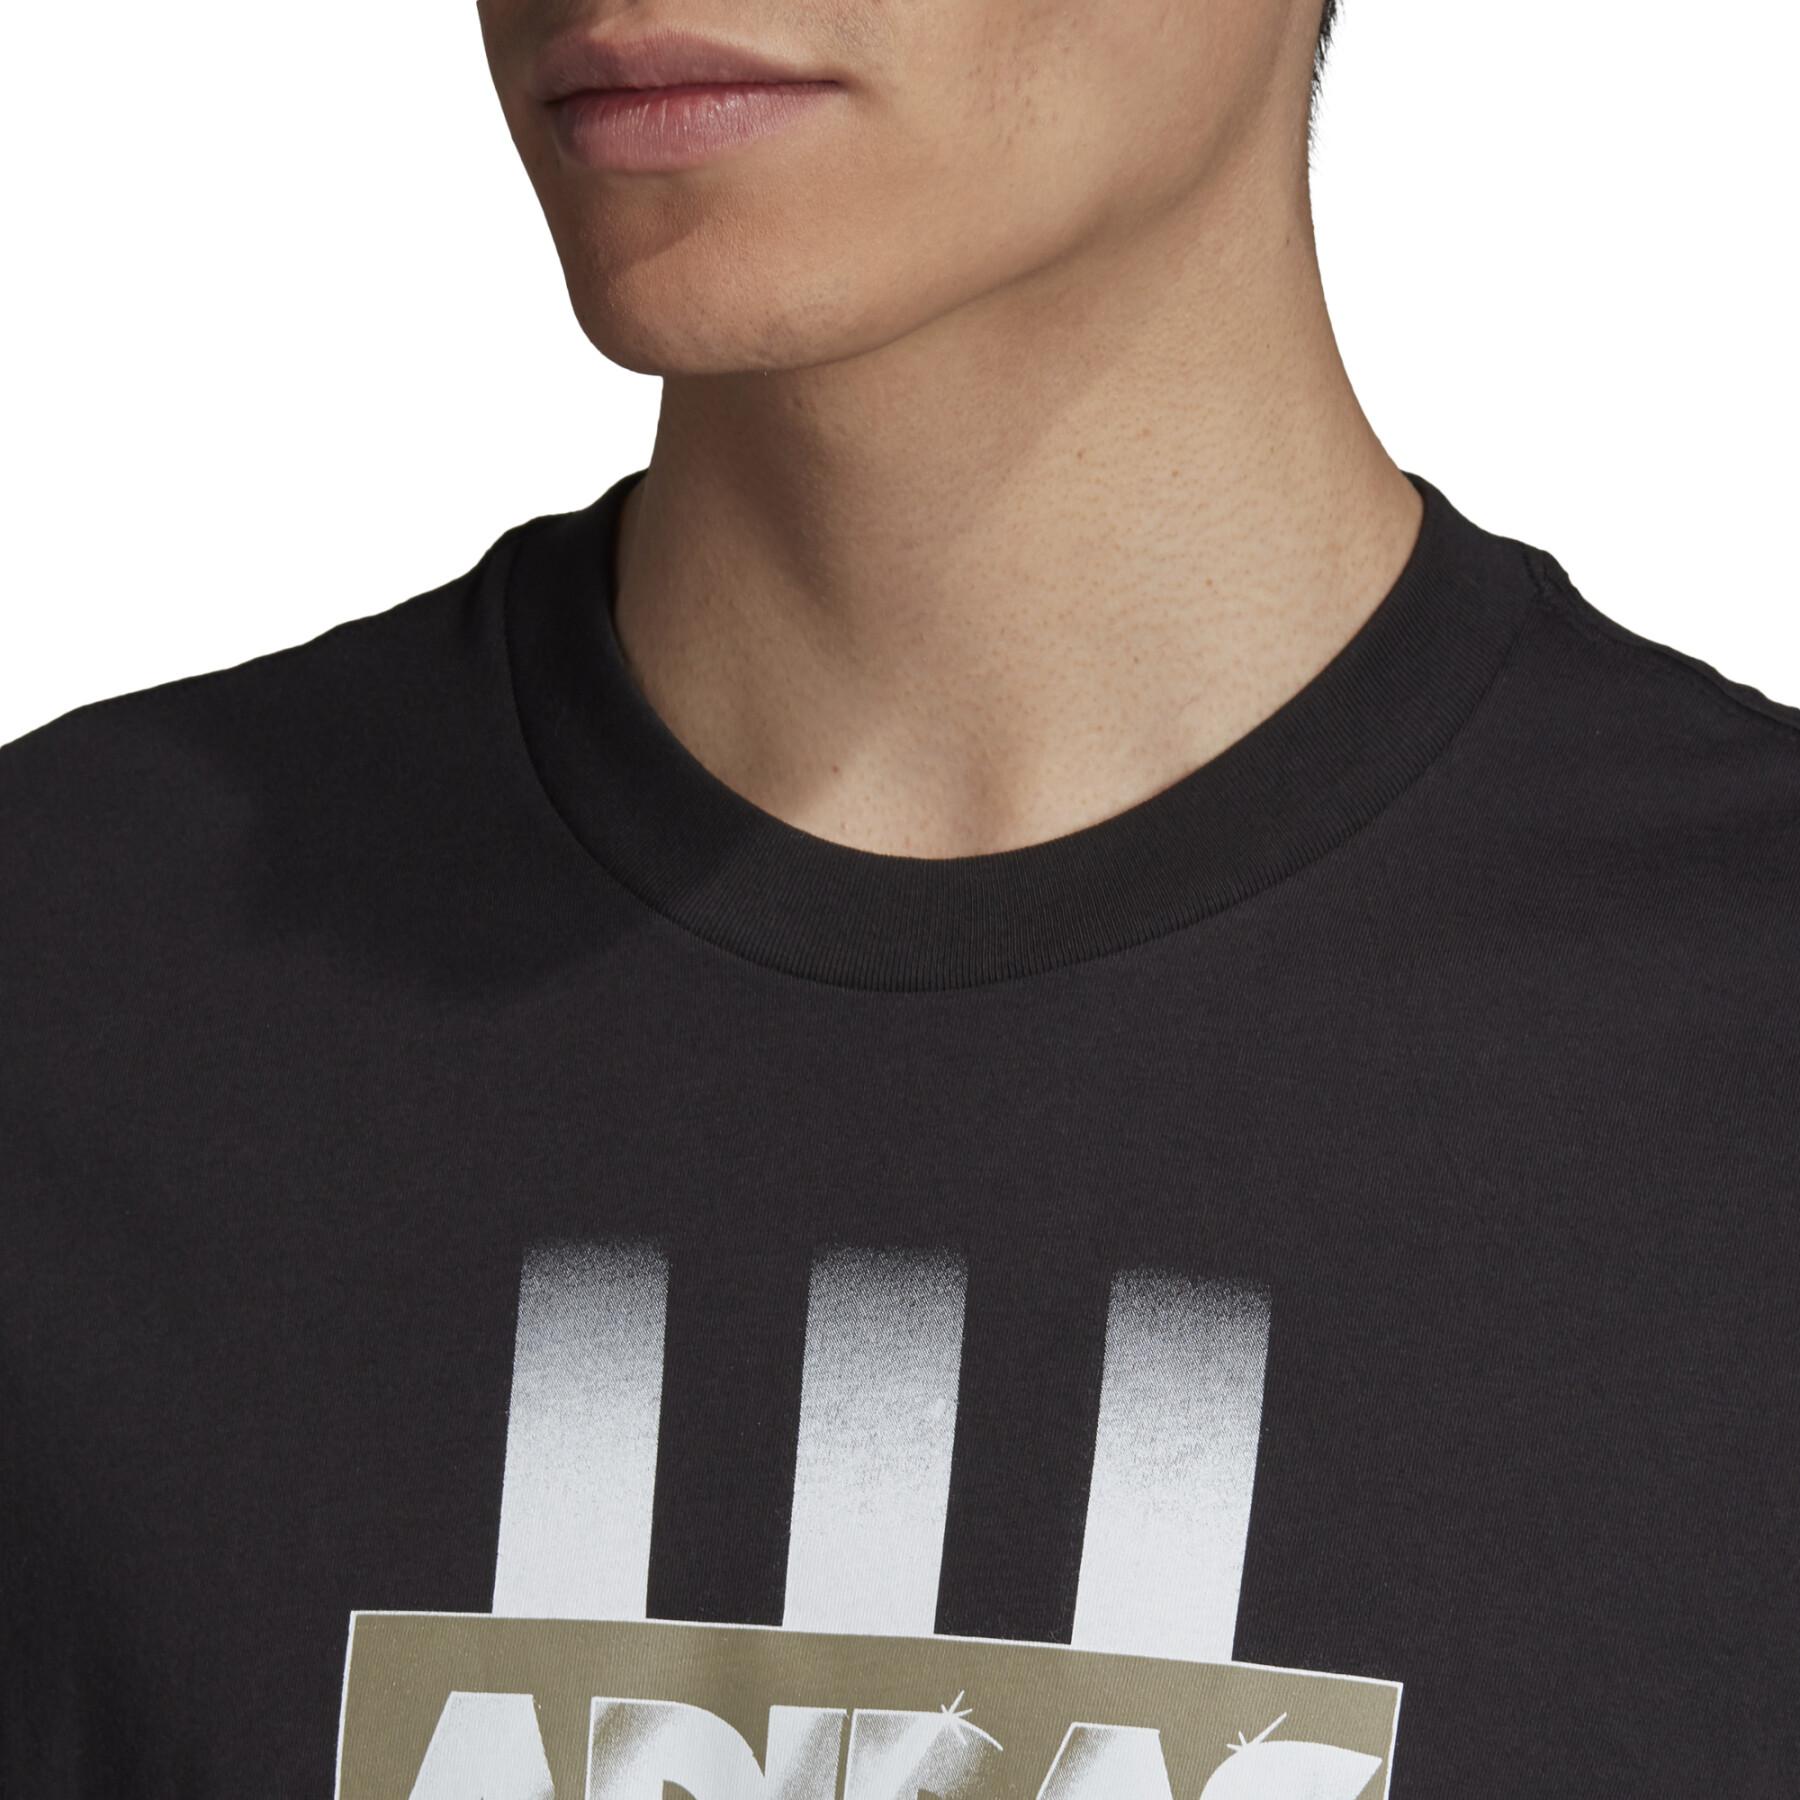 T-shirt adidas Bodega Logo